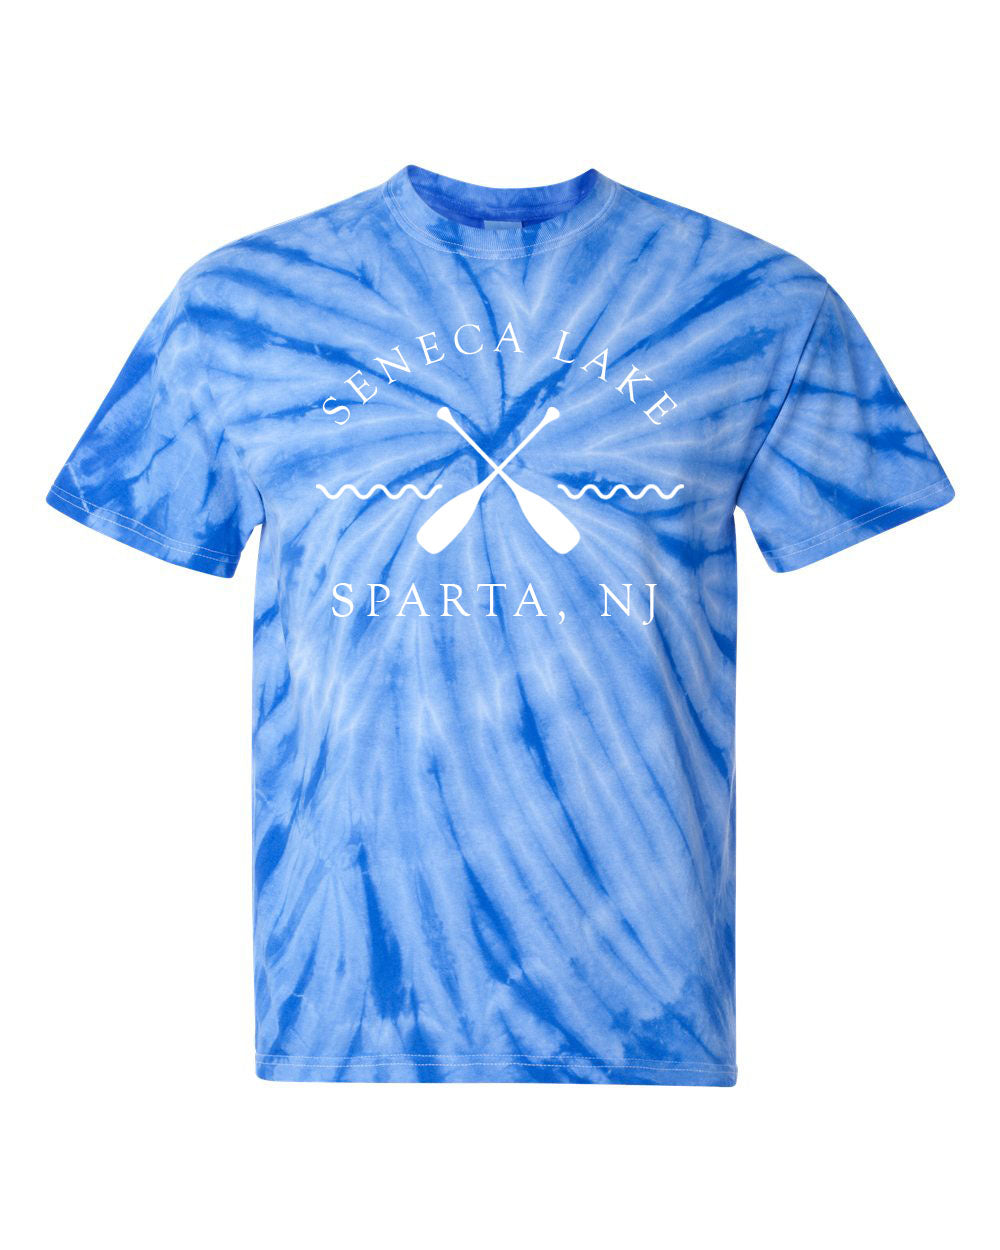 Seneca Lake Design 5 Tie Dye t-shirt